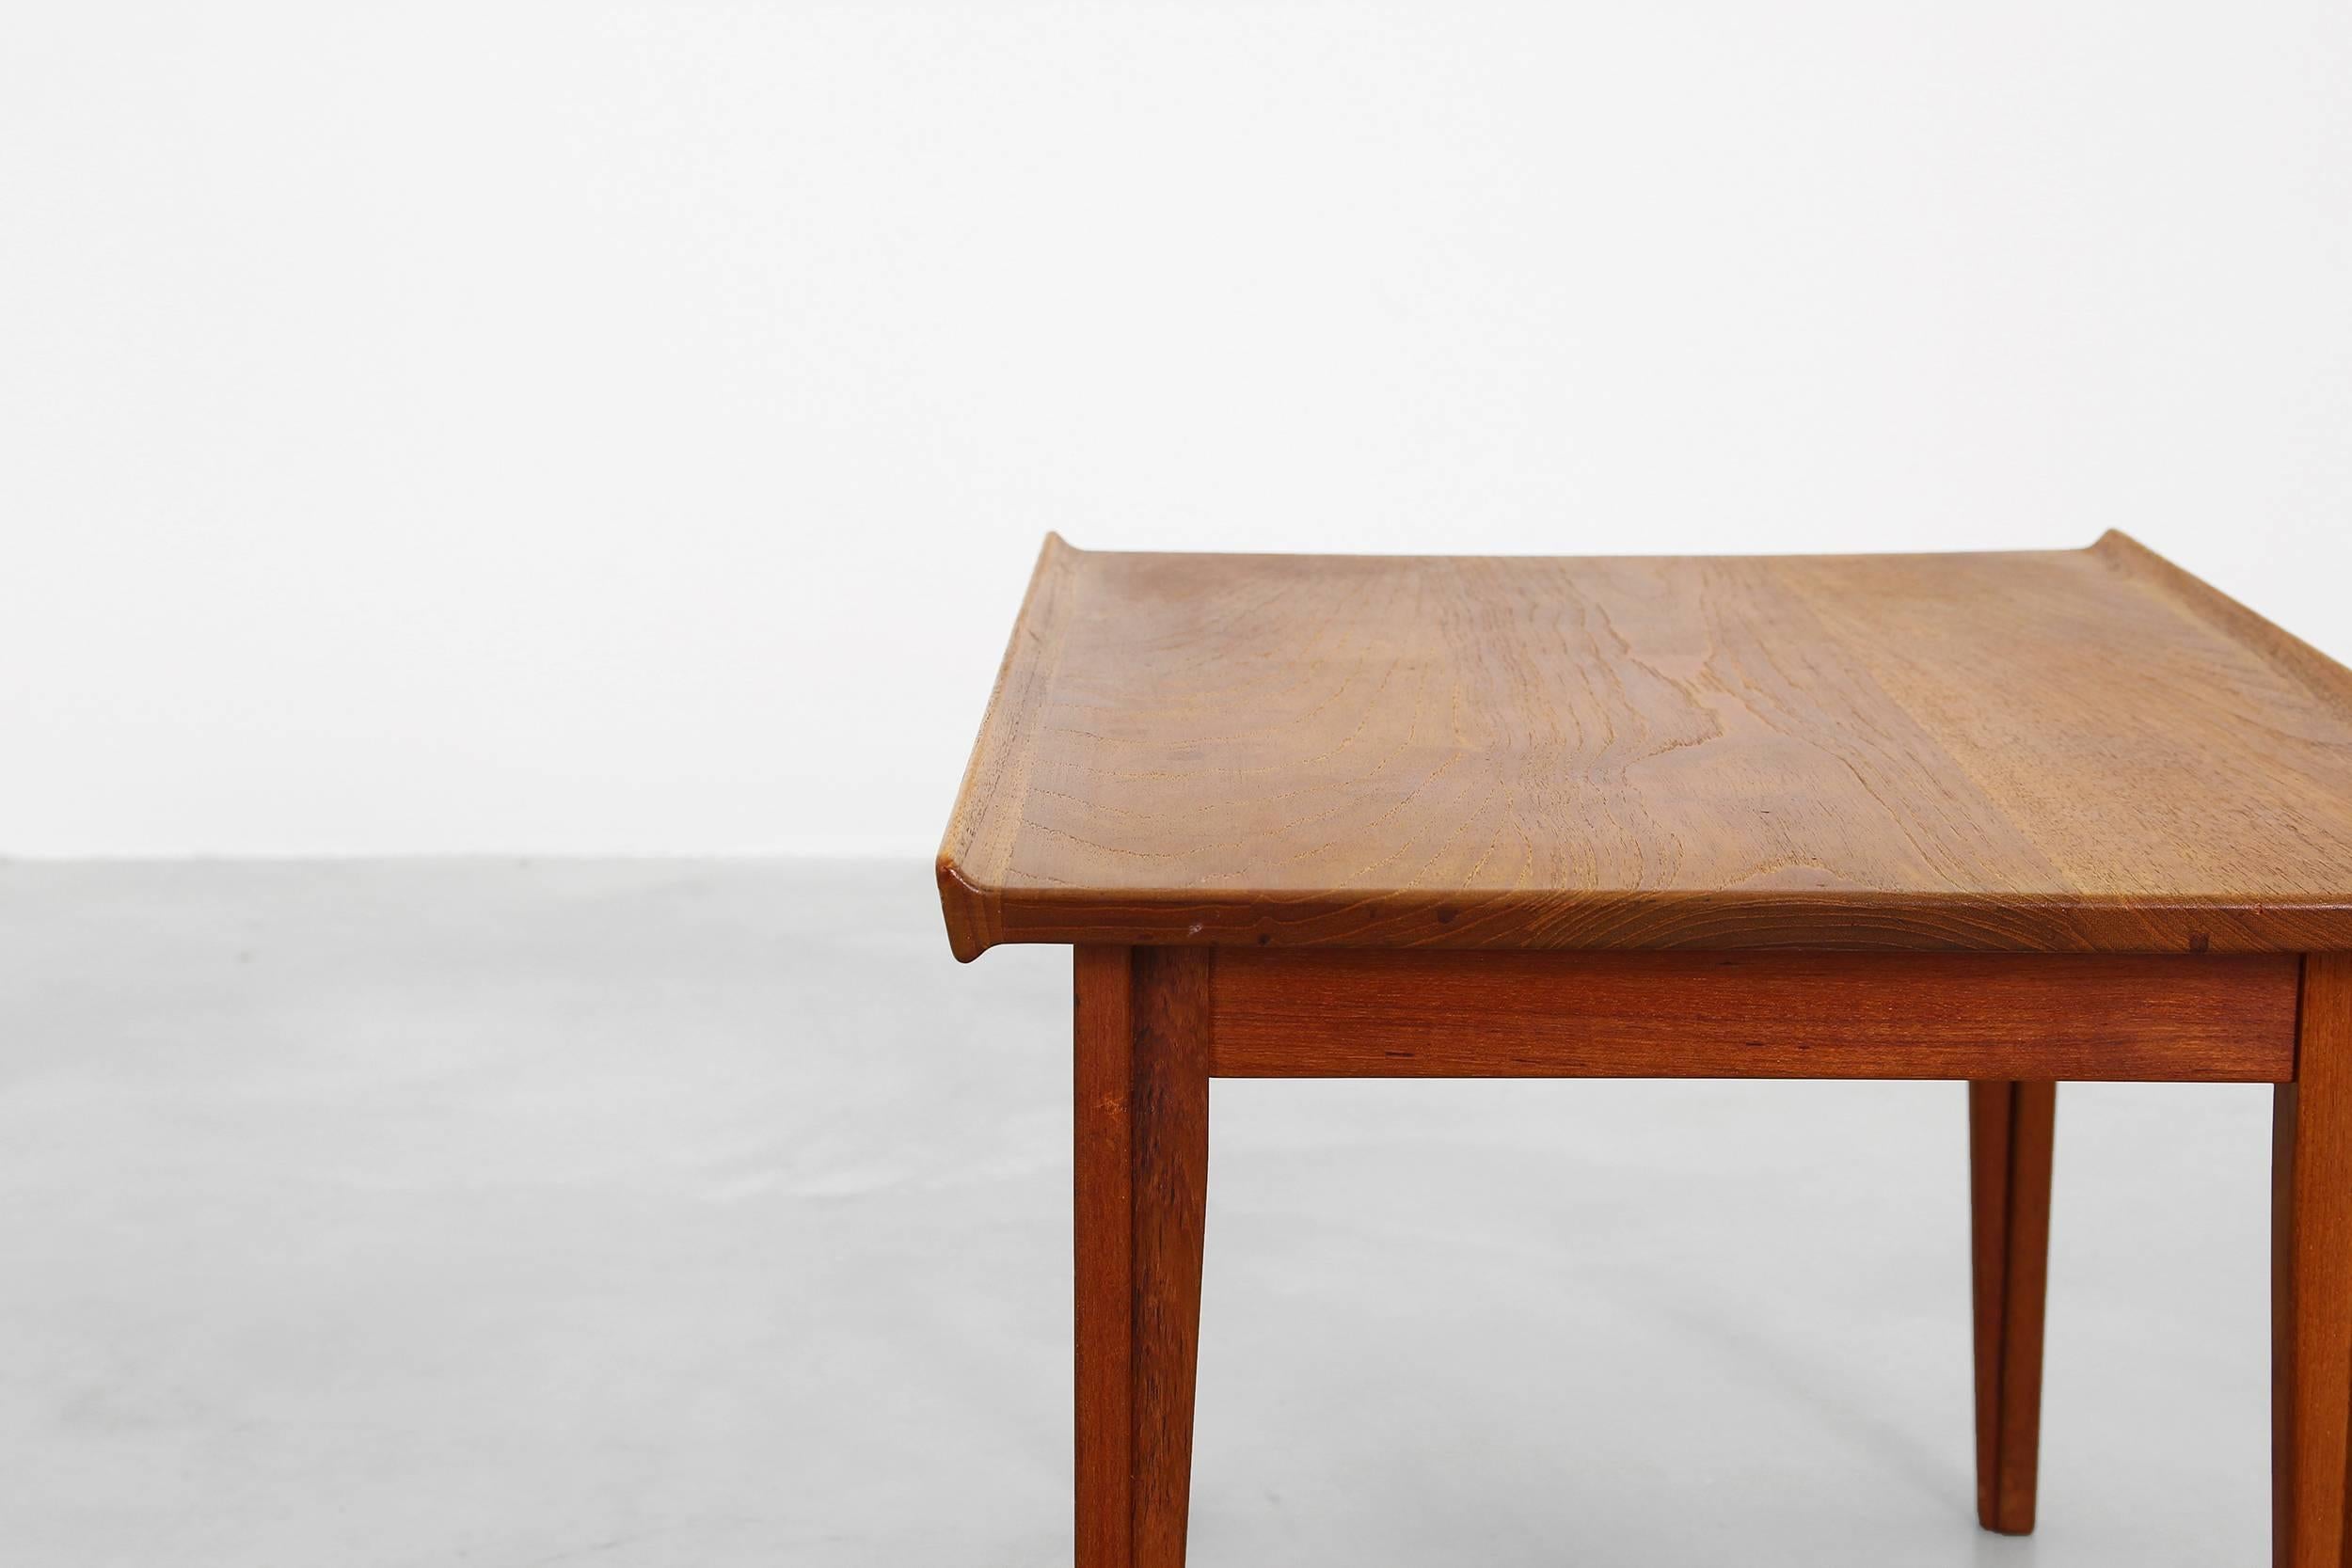 20th Century Coffee Table or Side Table by Finn Juhl for France & Daverkosen Søn